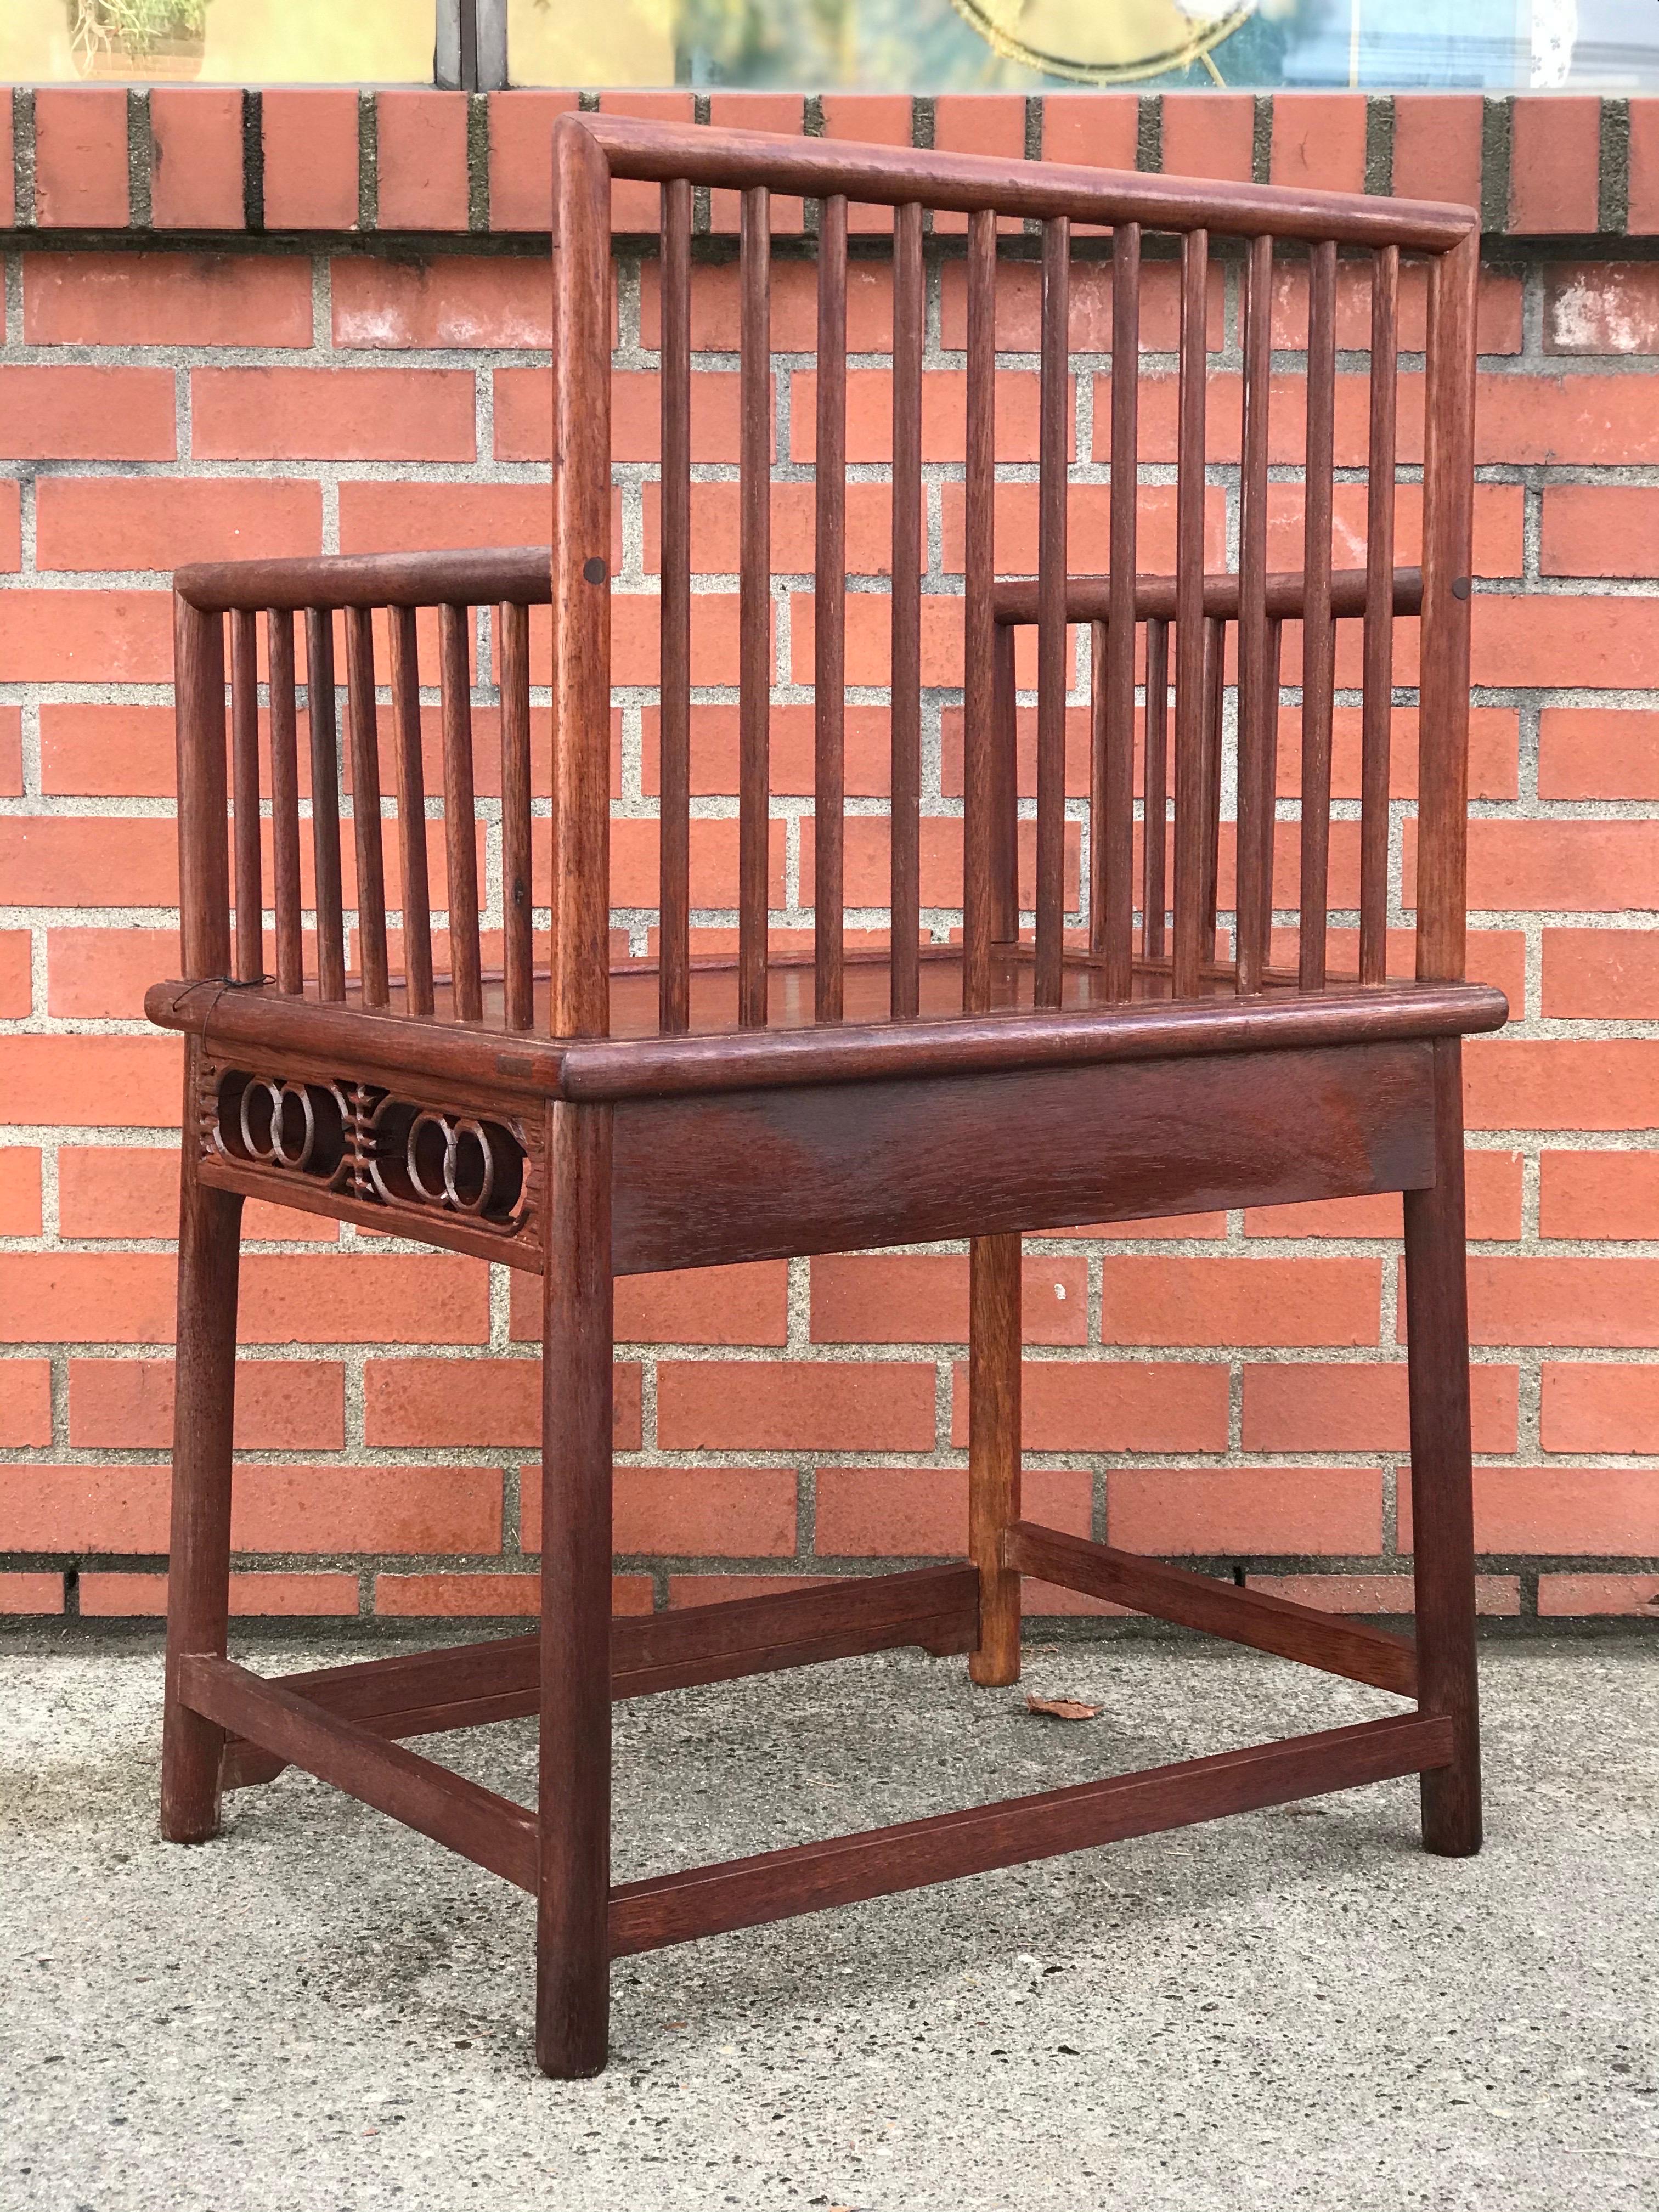 Vintage bentwood chair.

Dimensions. 23 W ; 36 H ; 18 D.